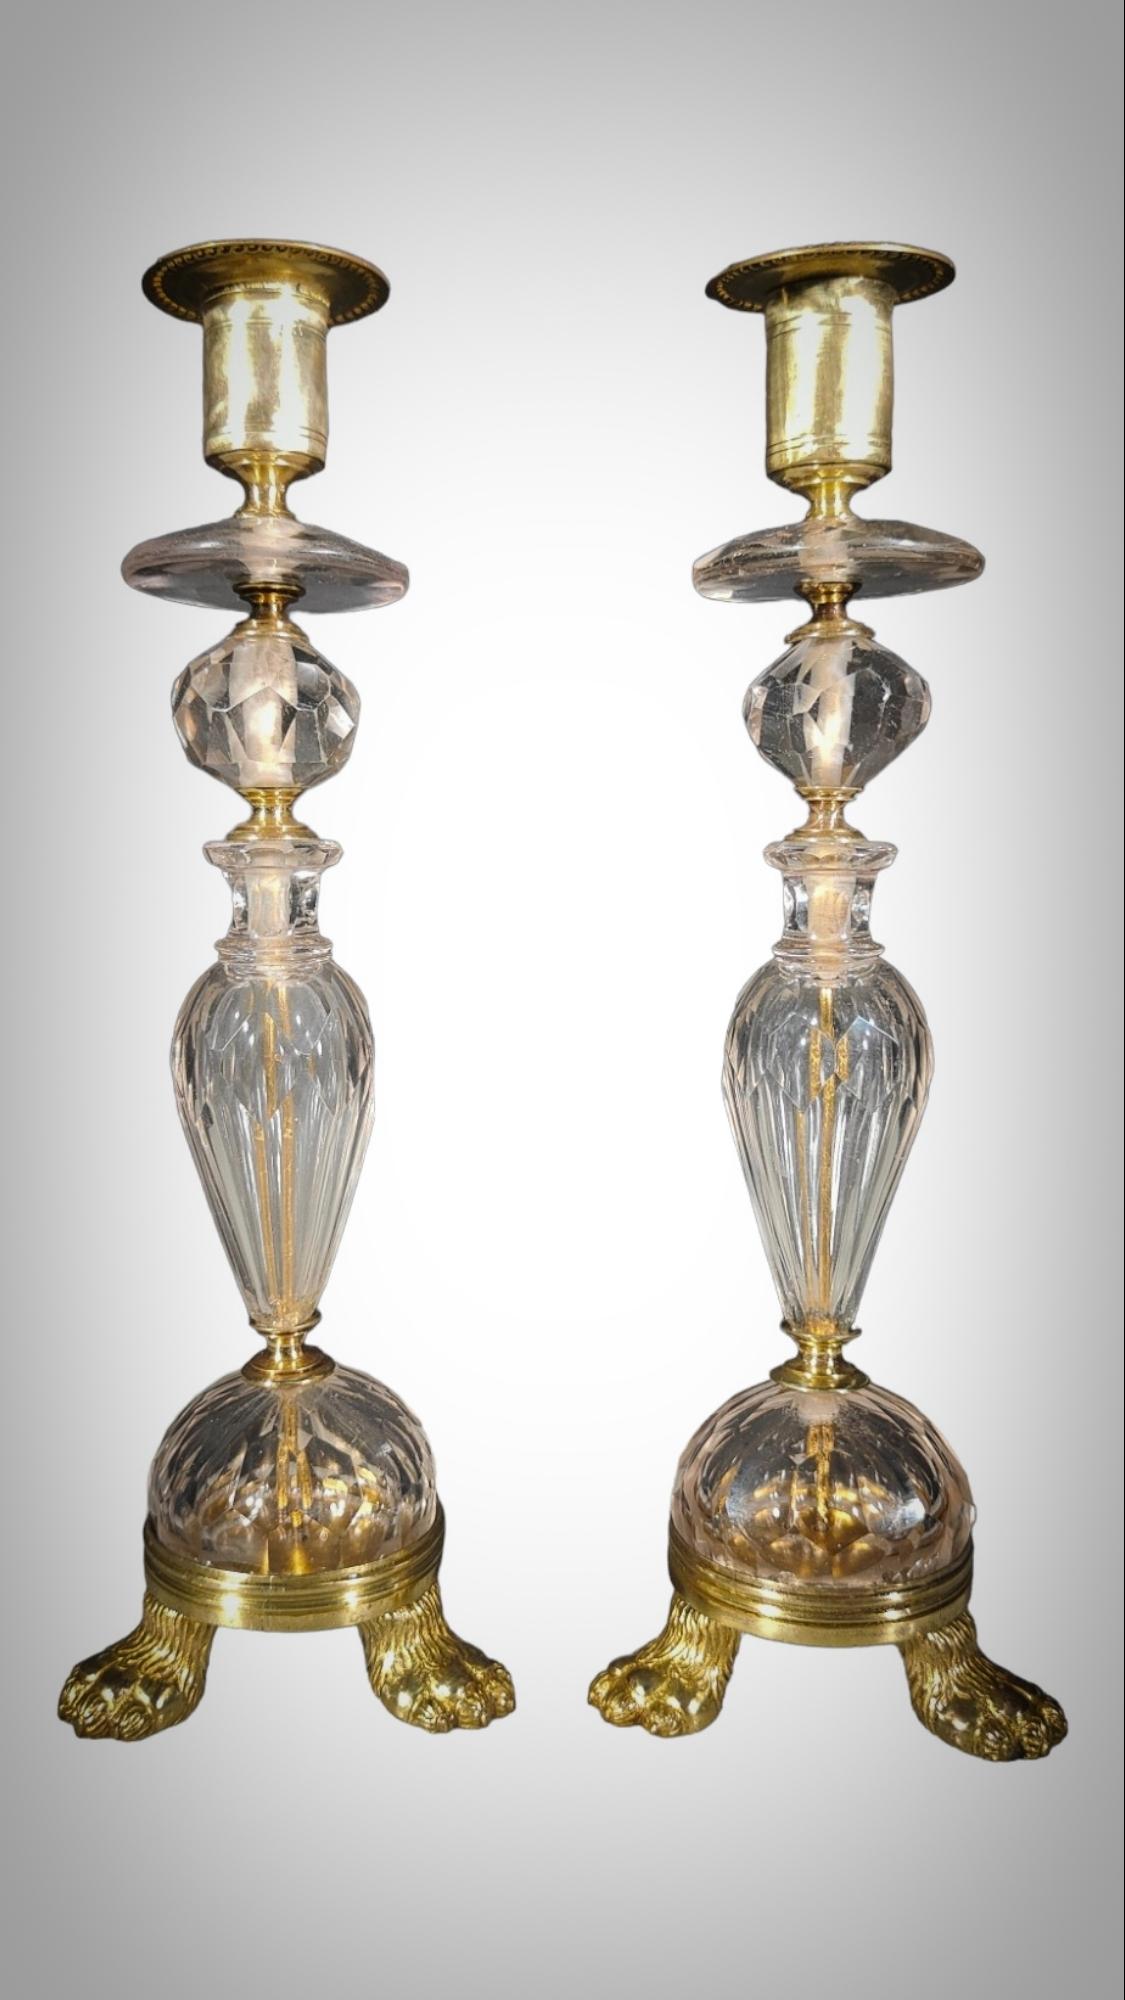 17th century brass candlesticks